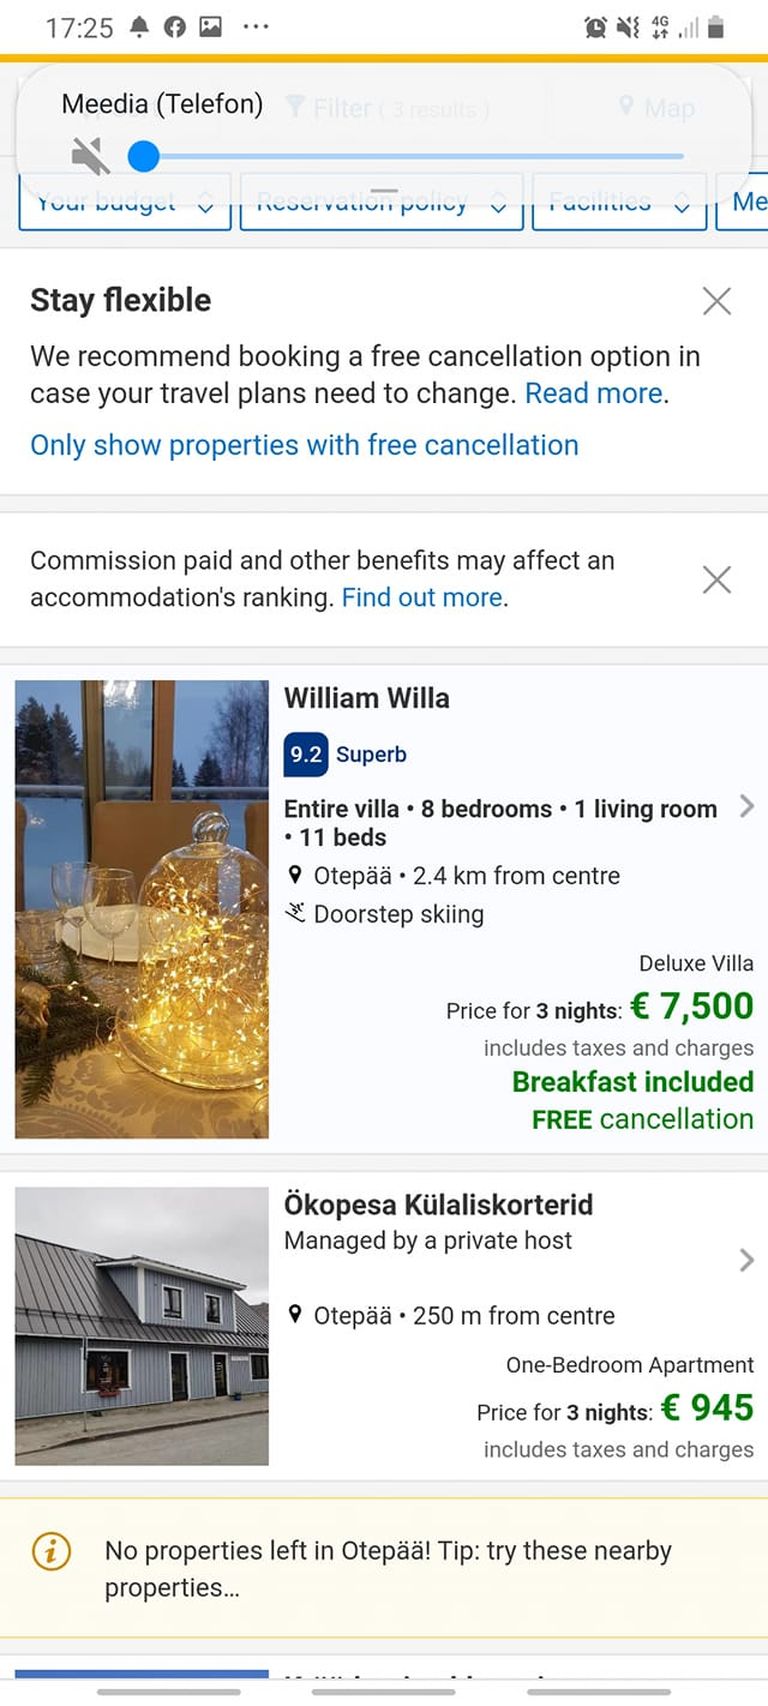 William Willa perenaisel näitas Booking.com leheküljel villa hinnaks 16 500 euro asemel 7500 eurot.